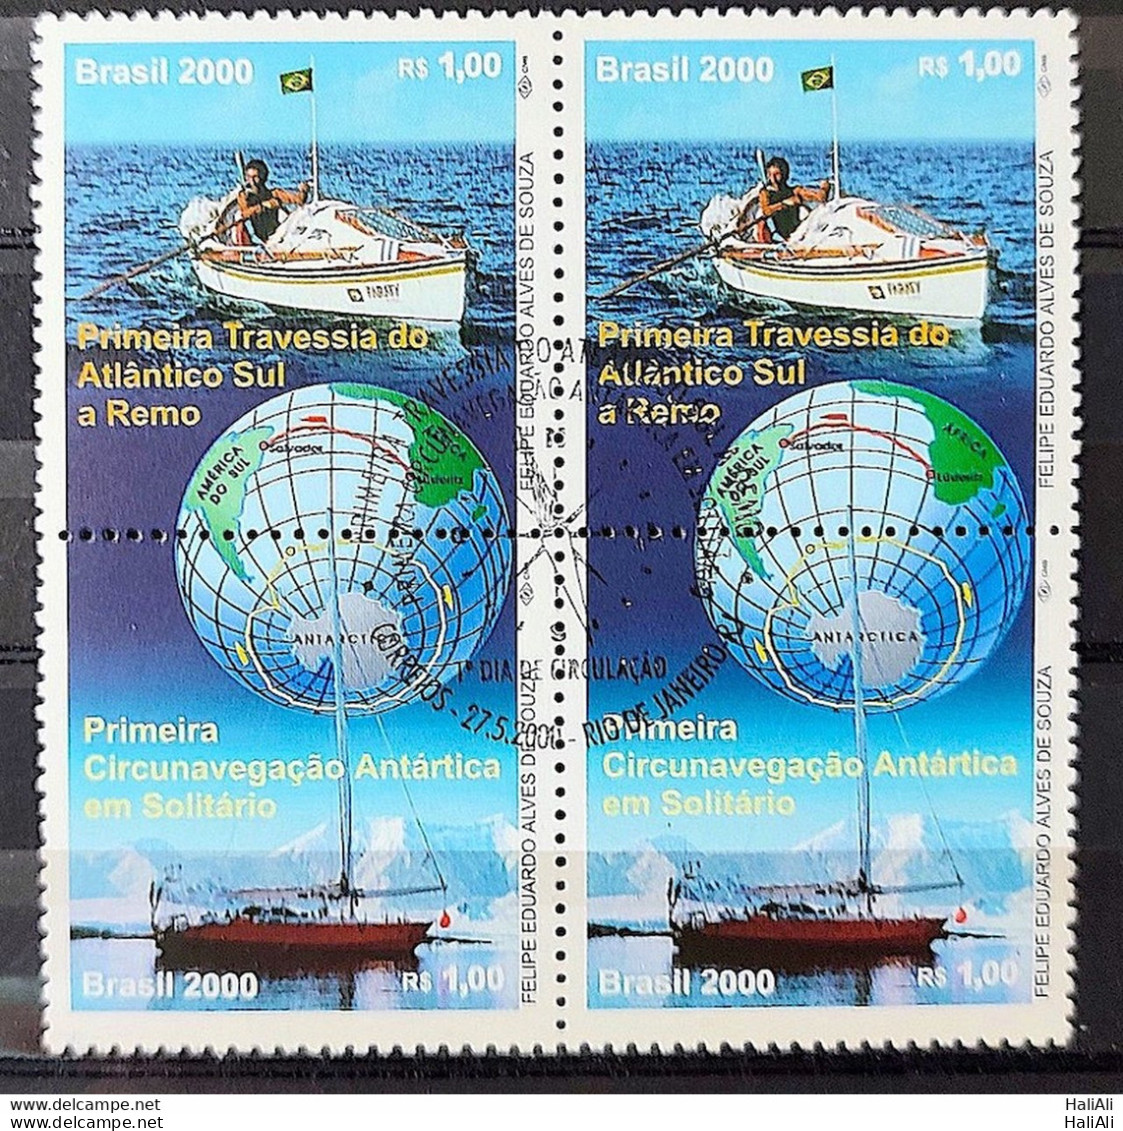 C 2282 Brazil Stamp Atlantic South Amyr Klink Parati Ship Flag Antartica Map 2000 Block Of 4 CBC RJ - Nuevos